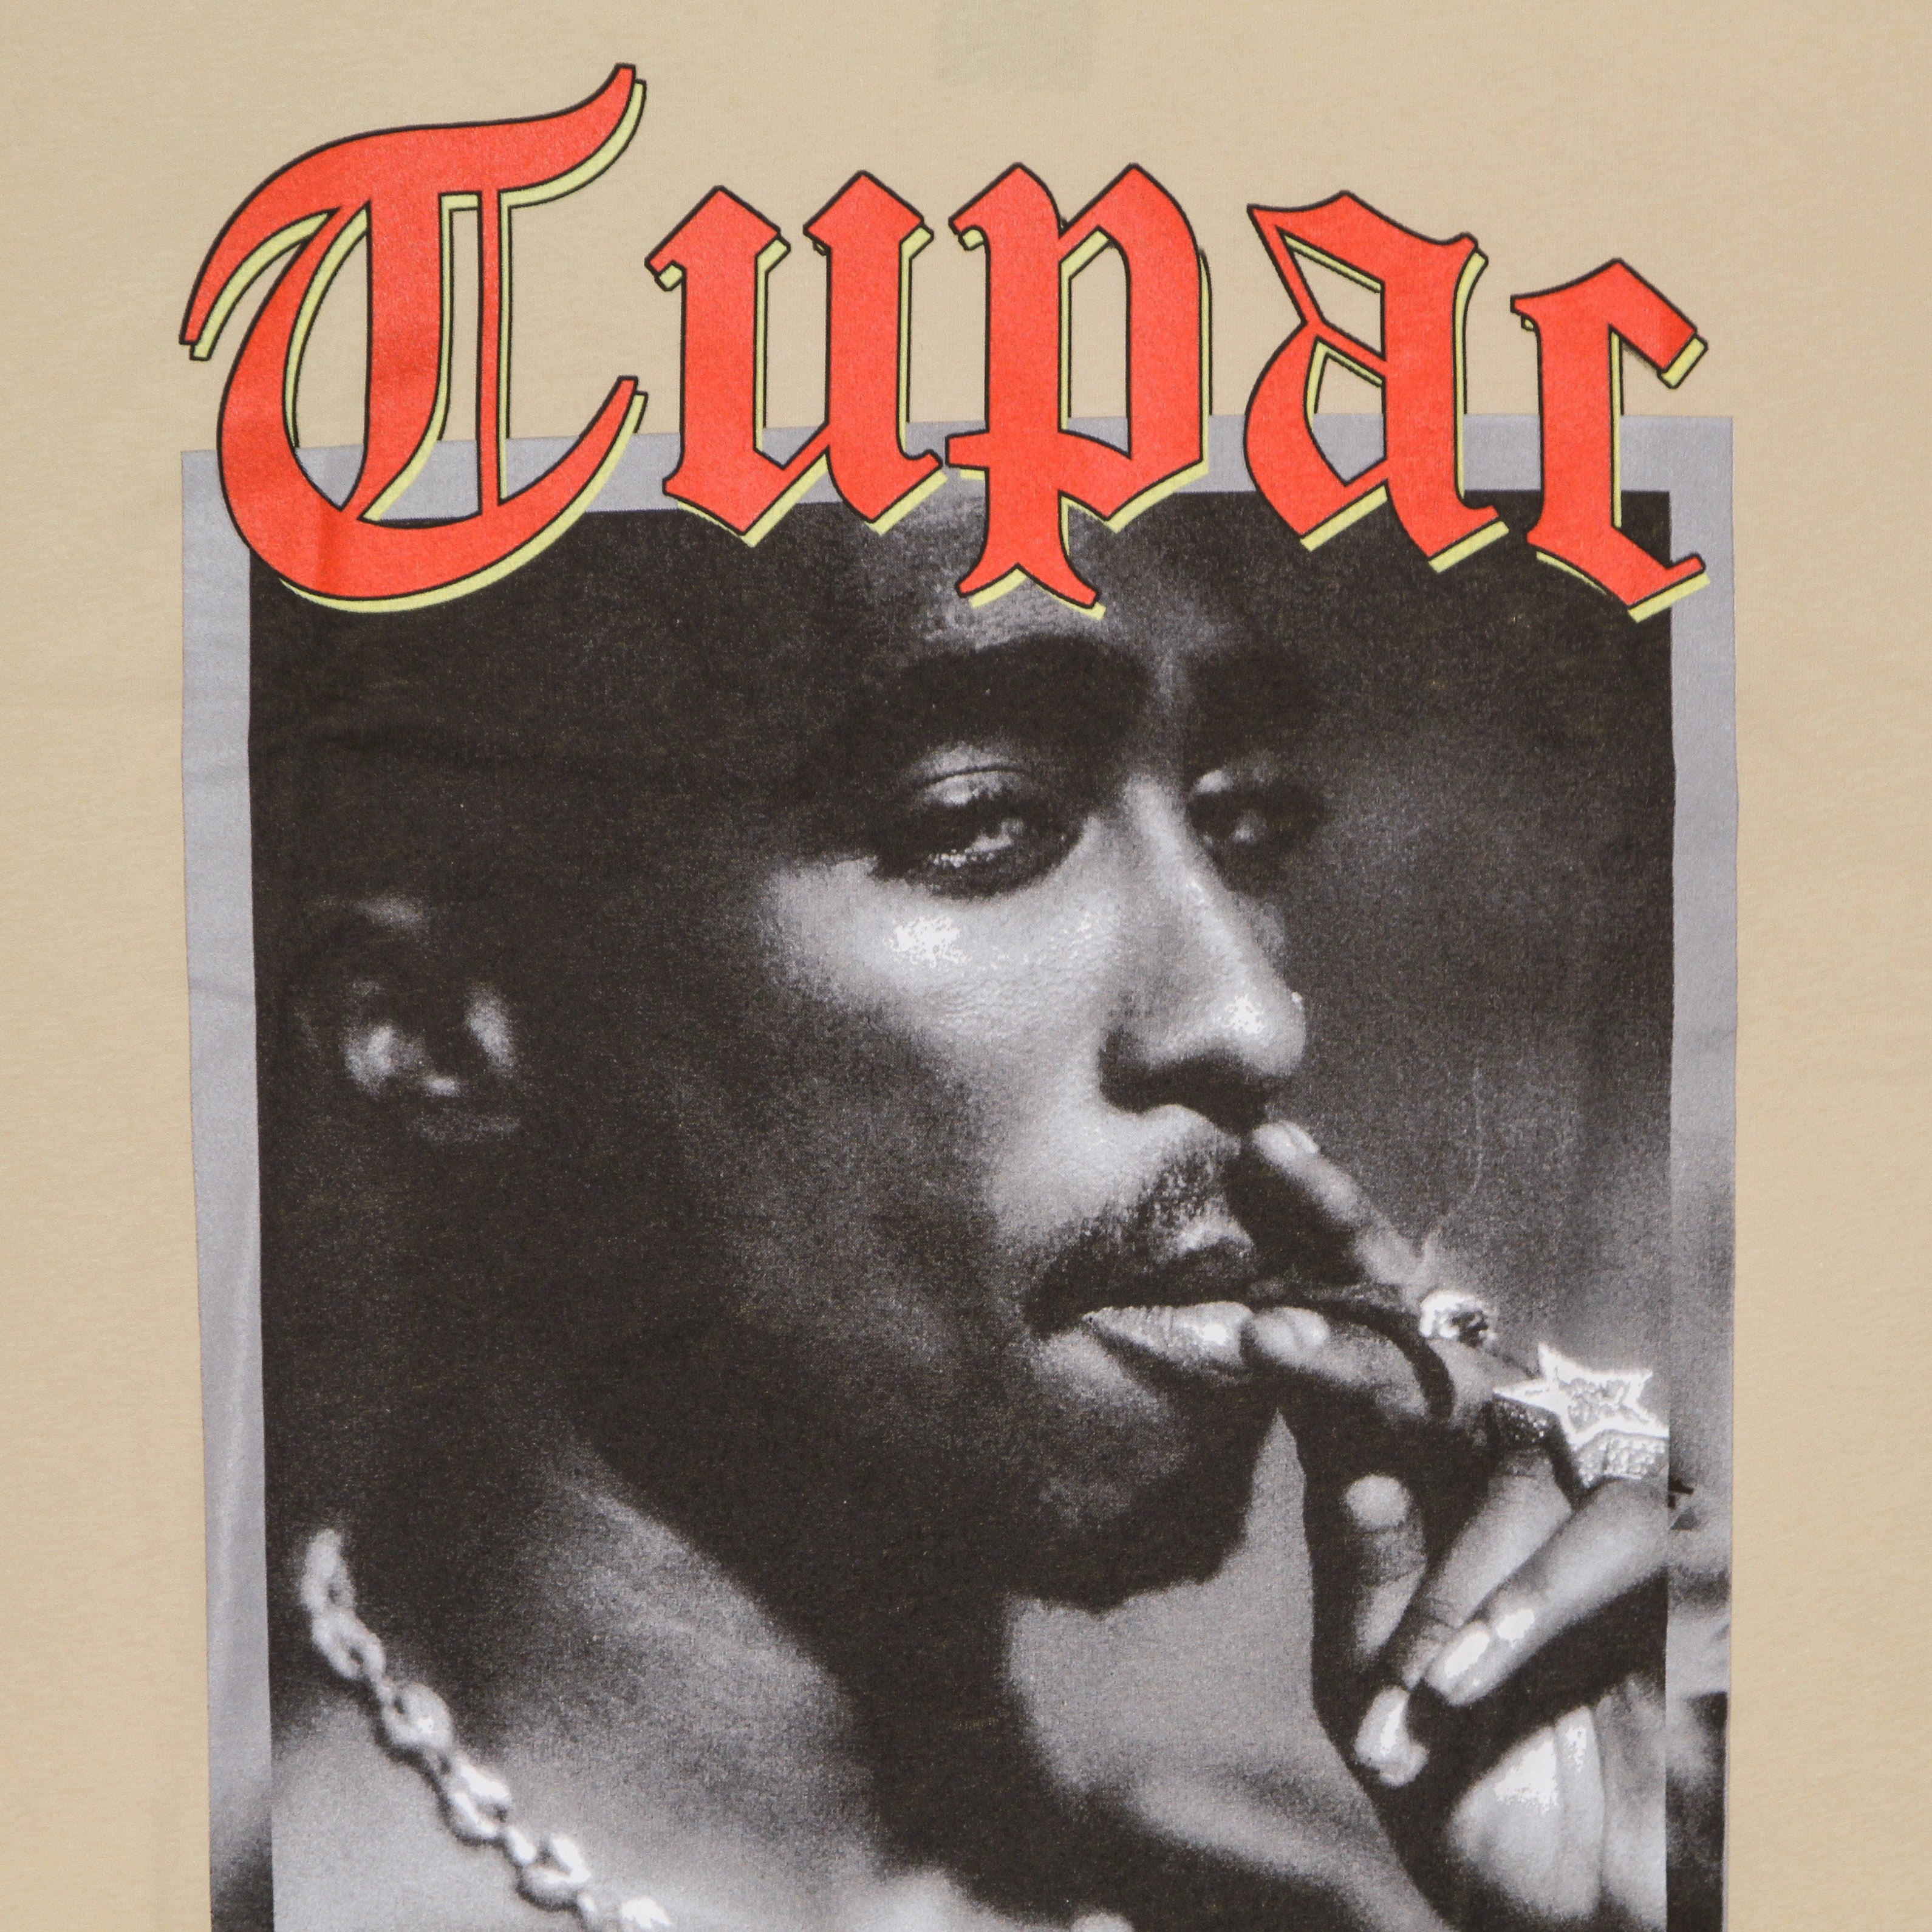 Tupac California Love Tee Sand Men's T-Shirt